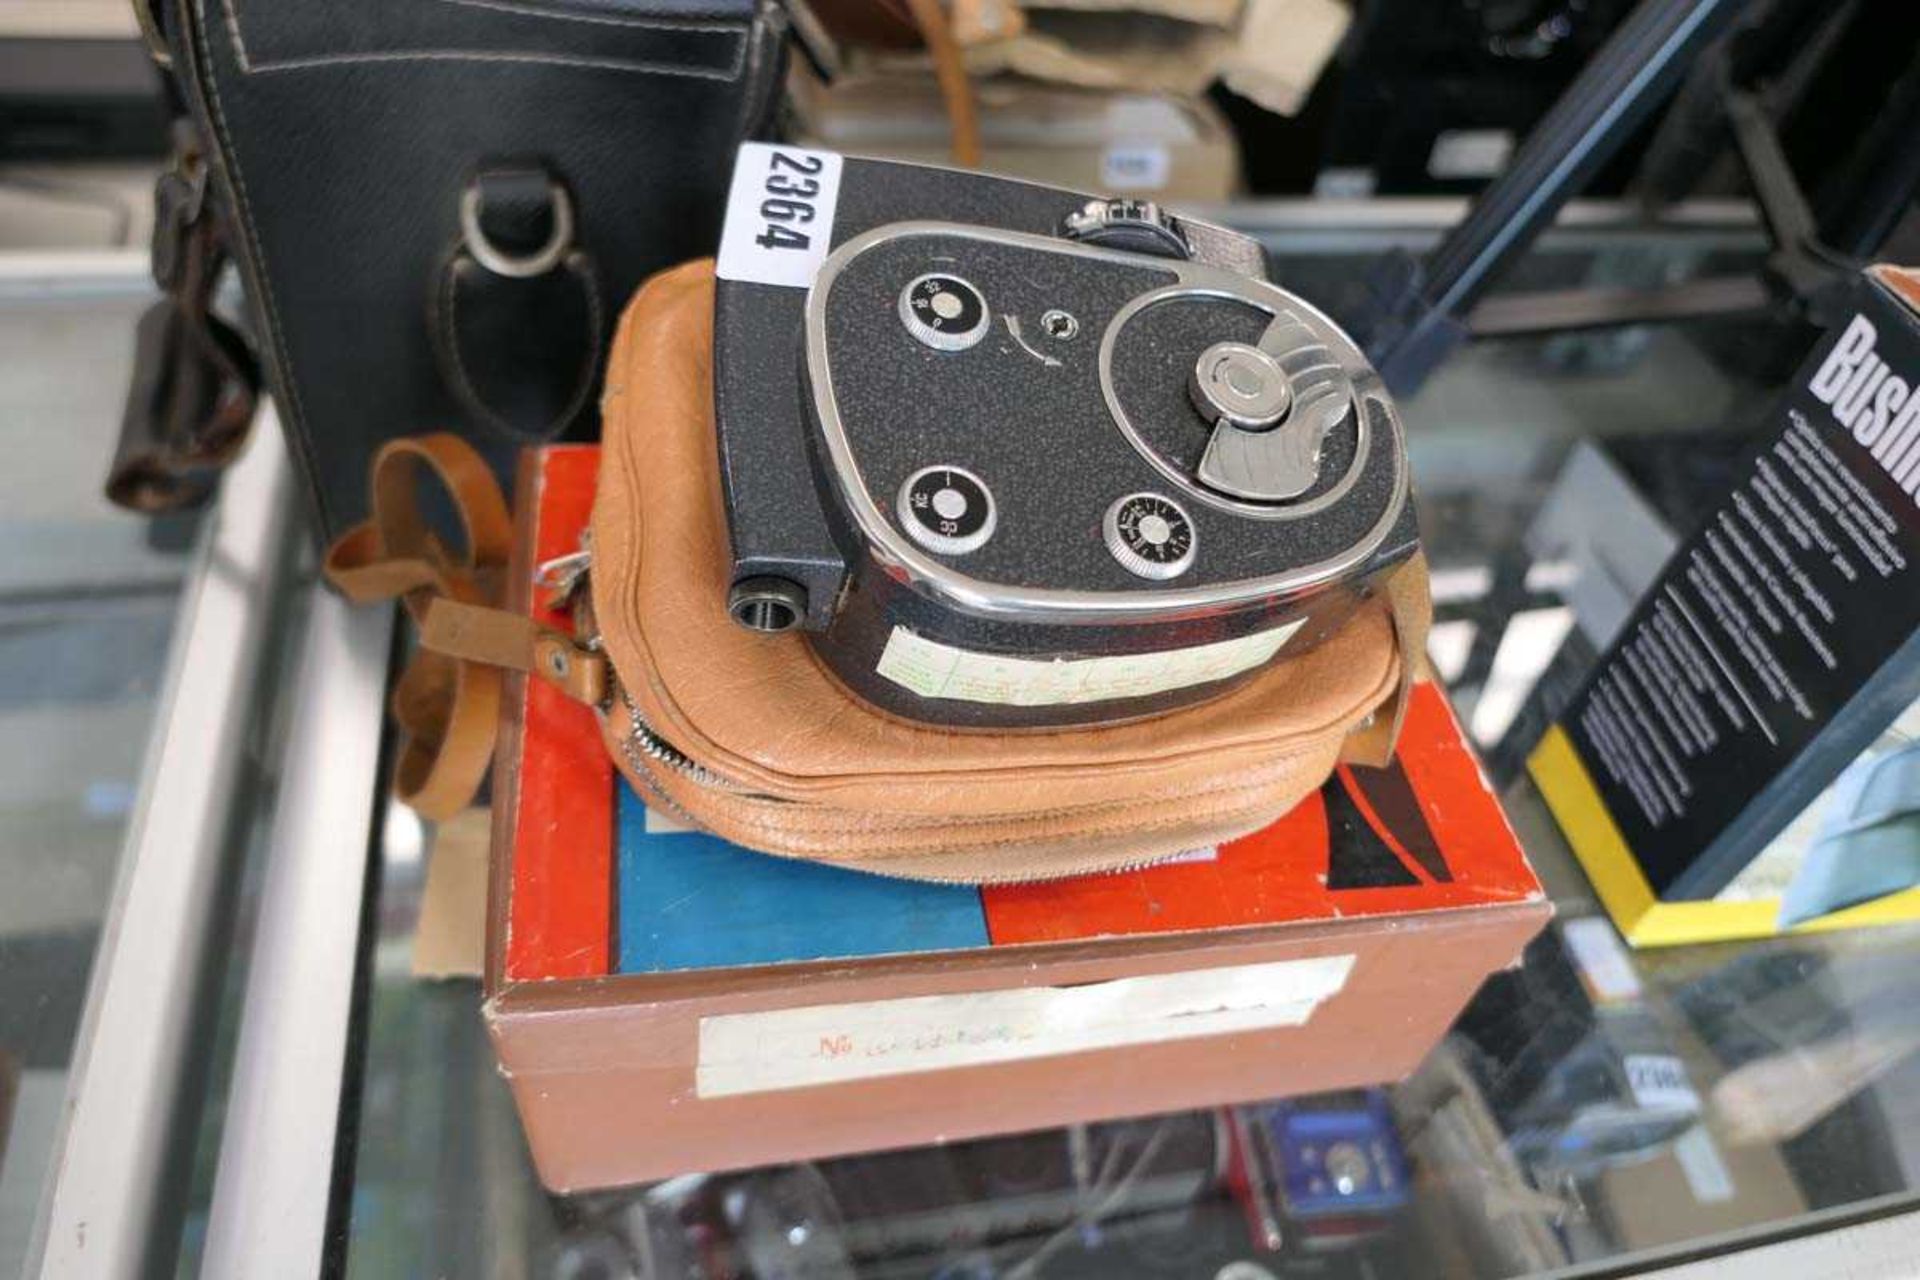 Quarz 8mm film camera with box